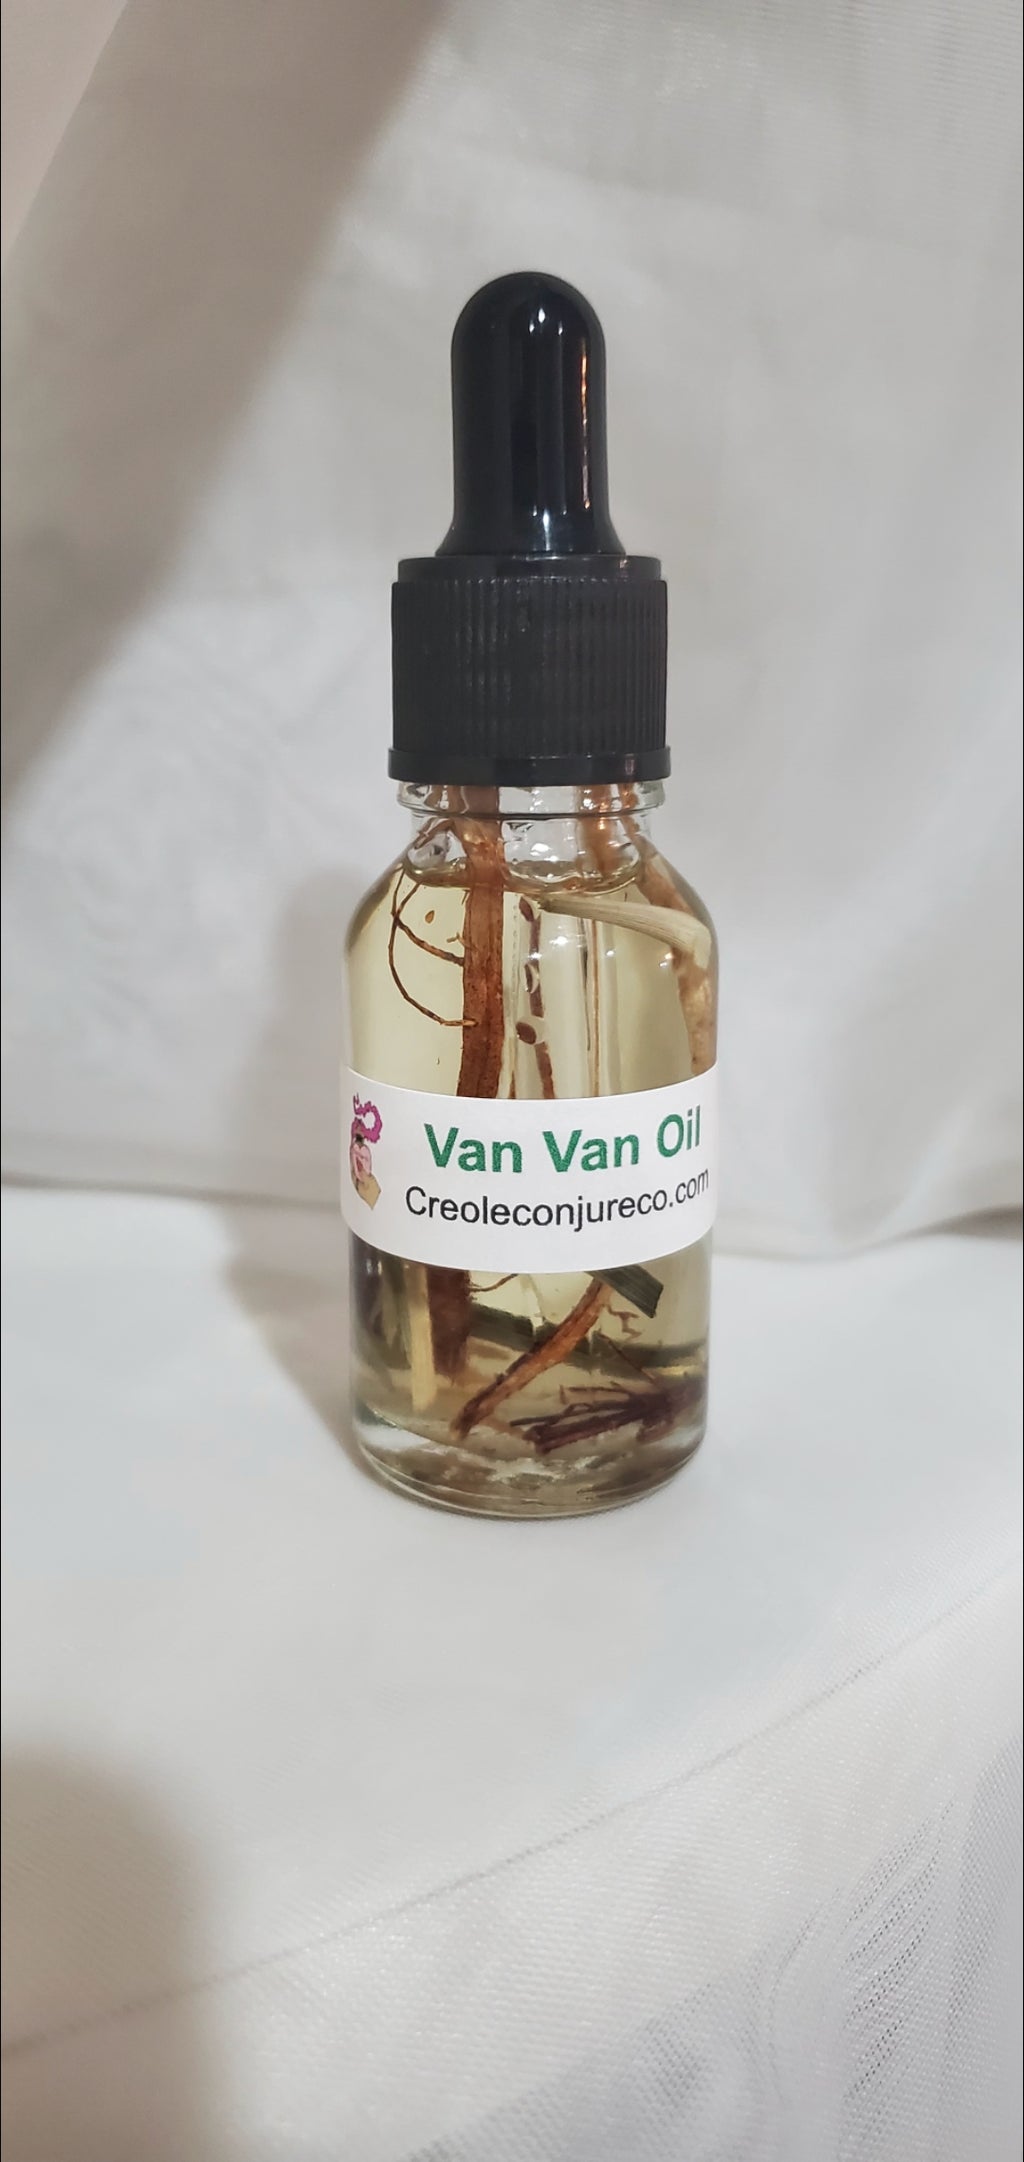 Van Van oil - hoodoo condition oil